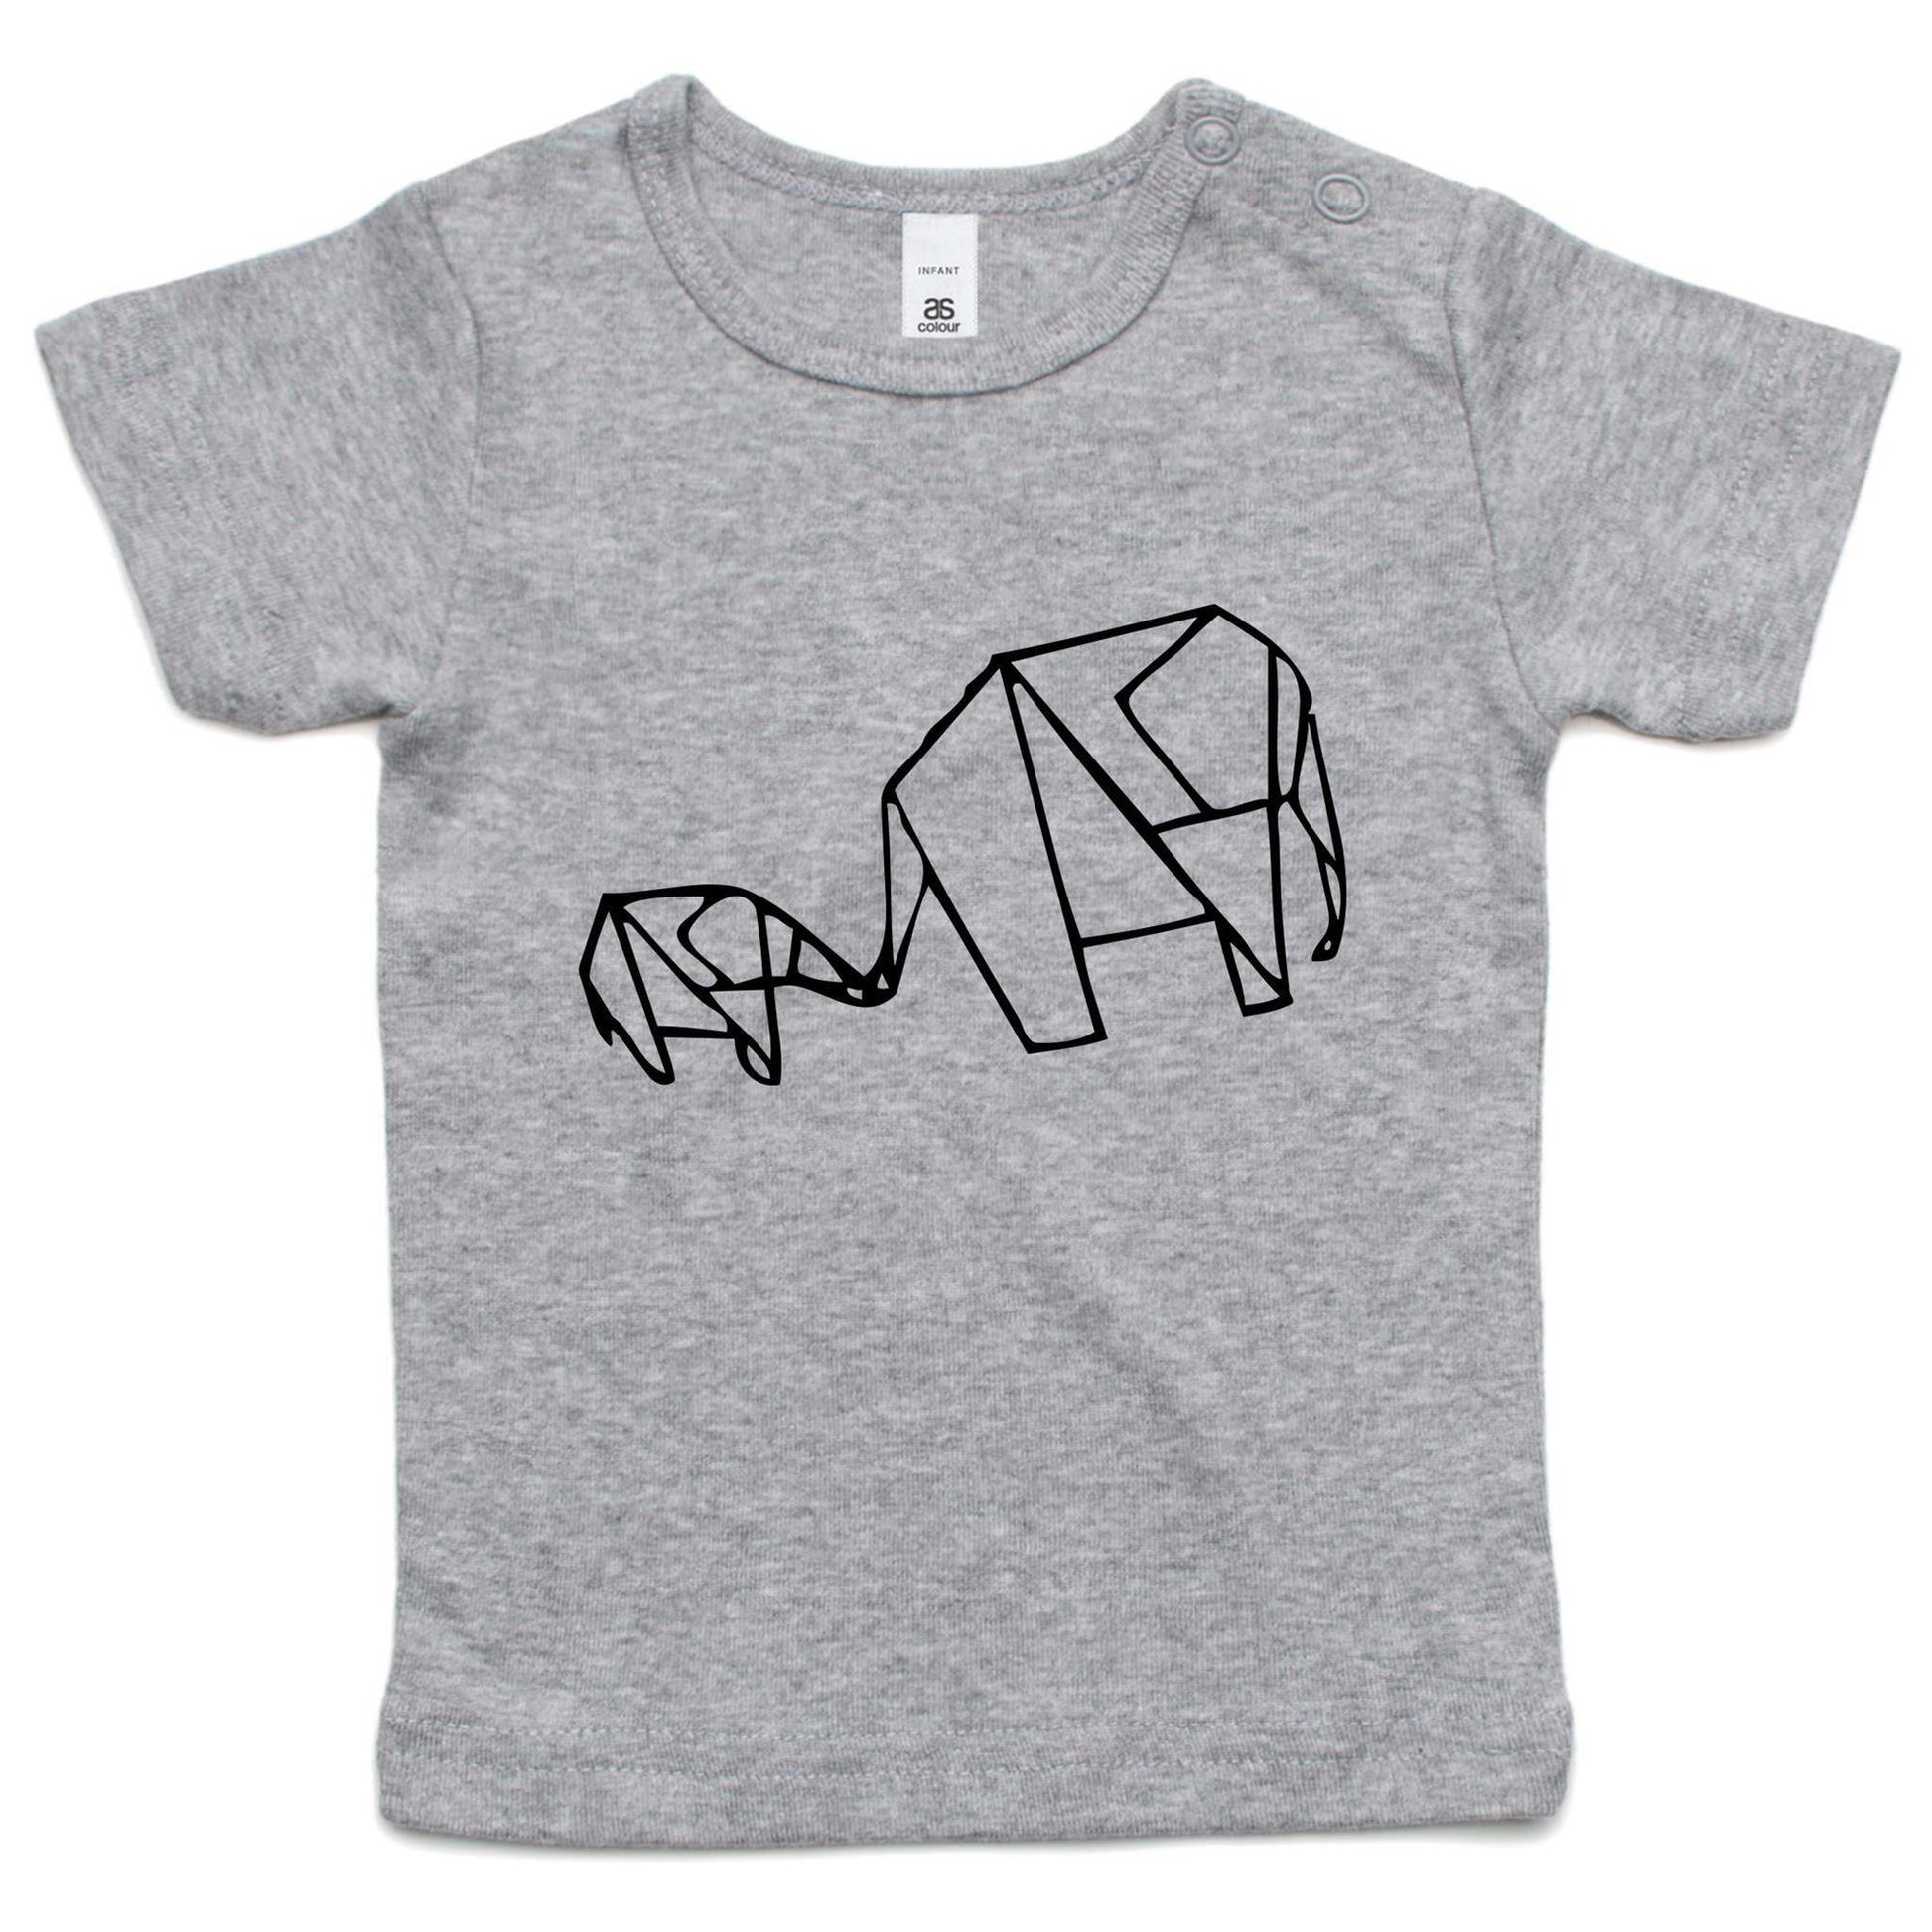 Origami Elephants - Baby T-shirt Grey Marle Baby T-shirt kids